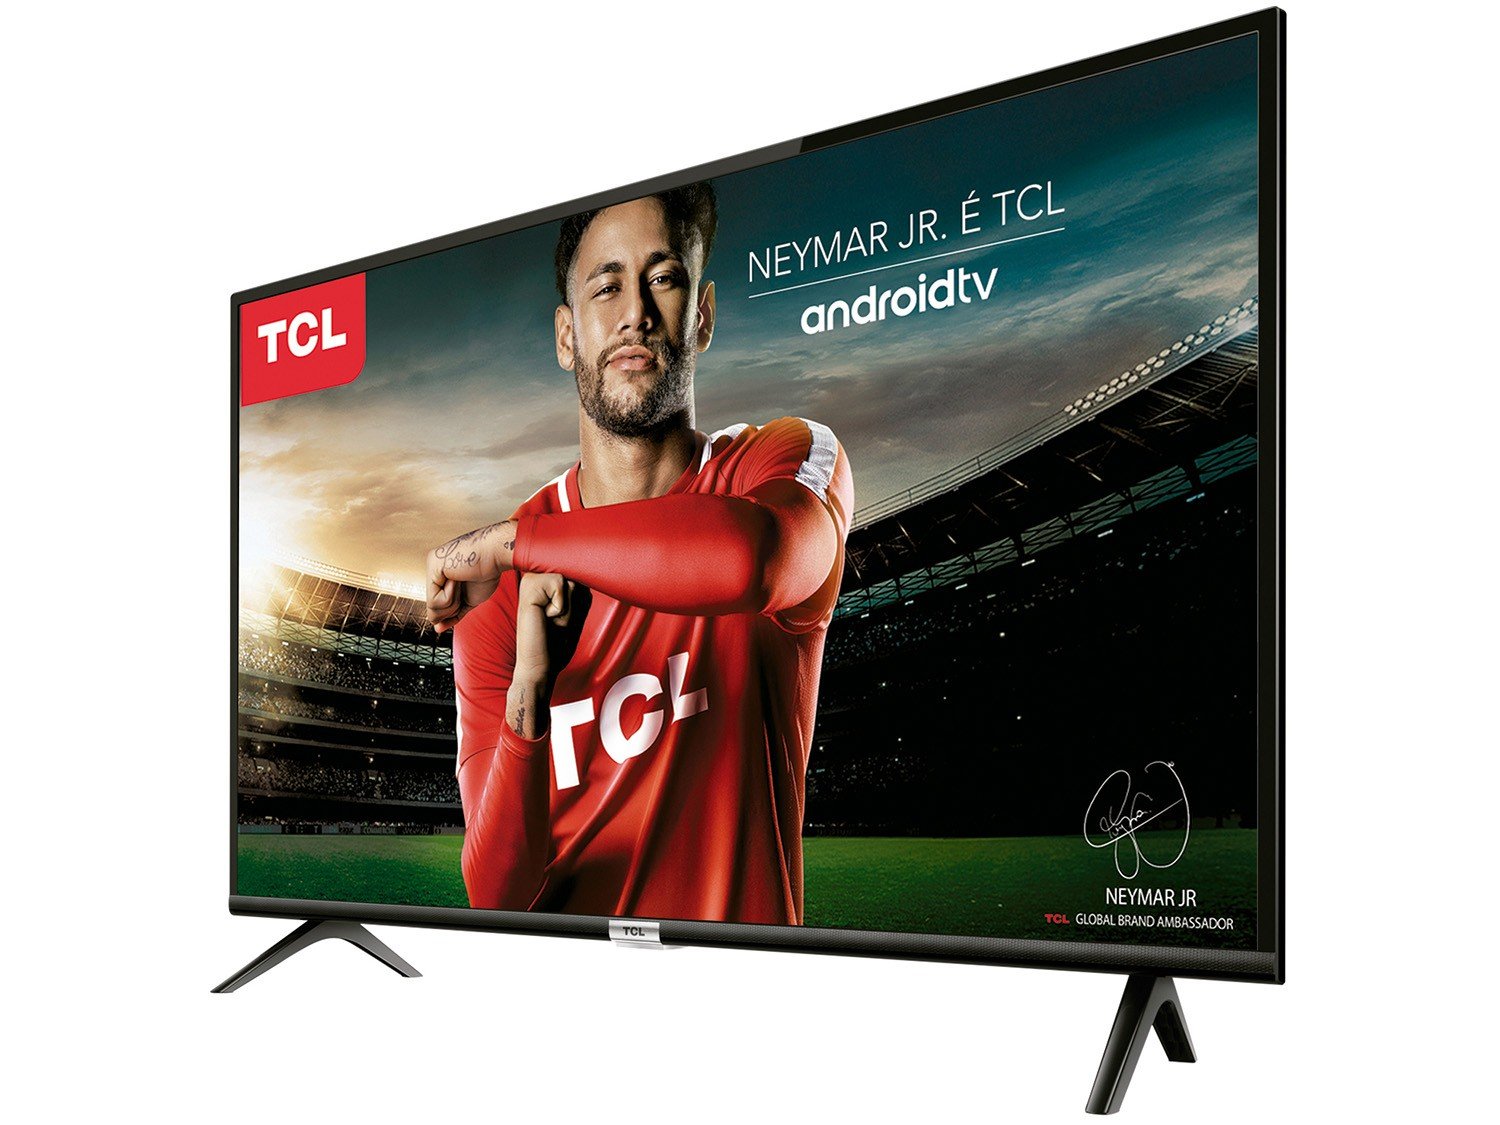 Телевизоры андроид тсл. TCL l40s6500. TCL TV 32s6500. Телевизор TCL Android TV 40s6500. TCL андроид ТВ 32.